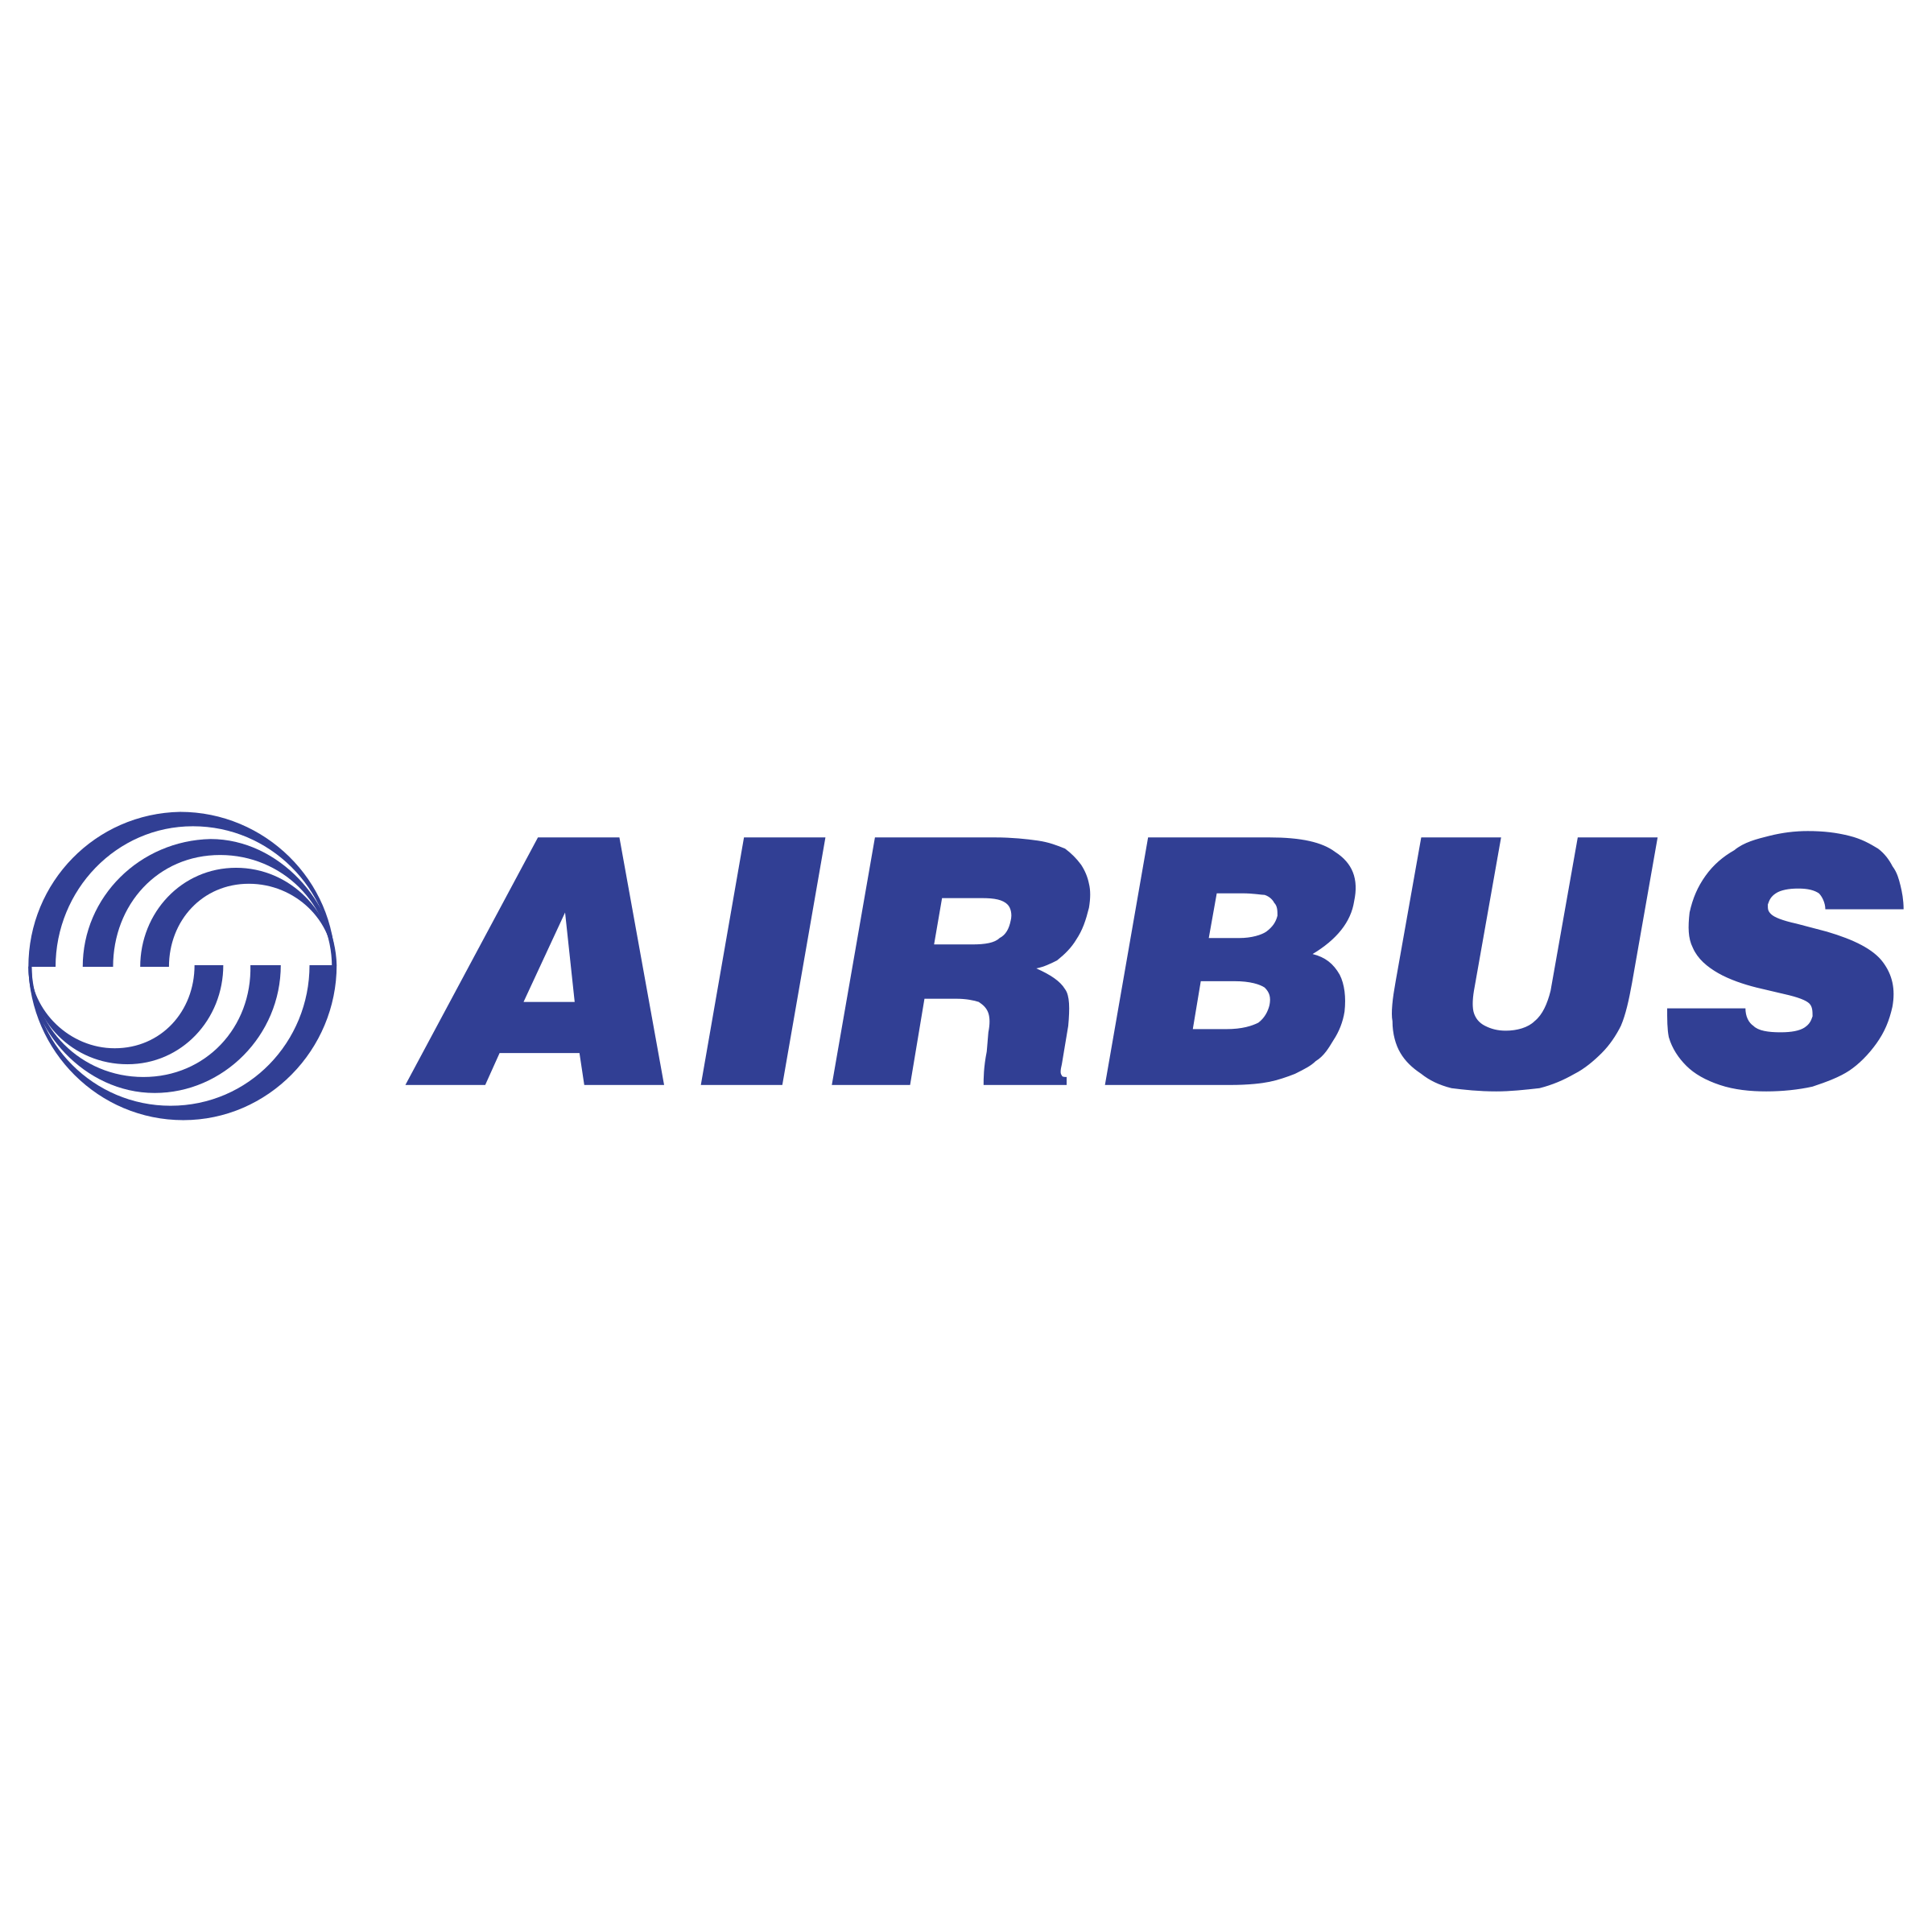 Airbus Logo - Airbus Logo PNG Transparent & SVG Vector - Freebie Supply